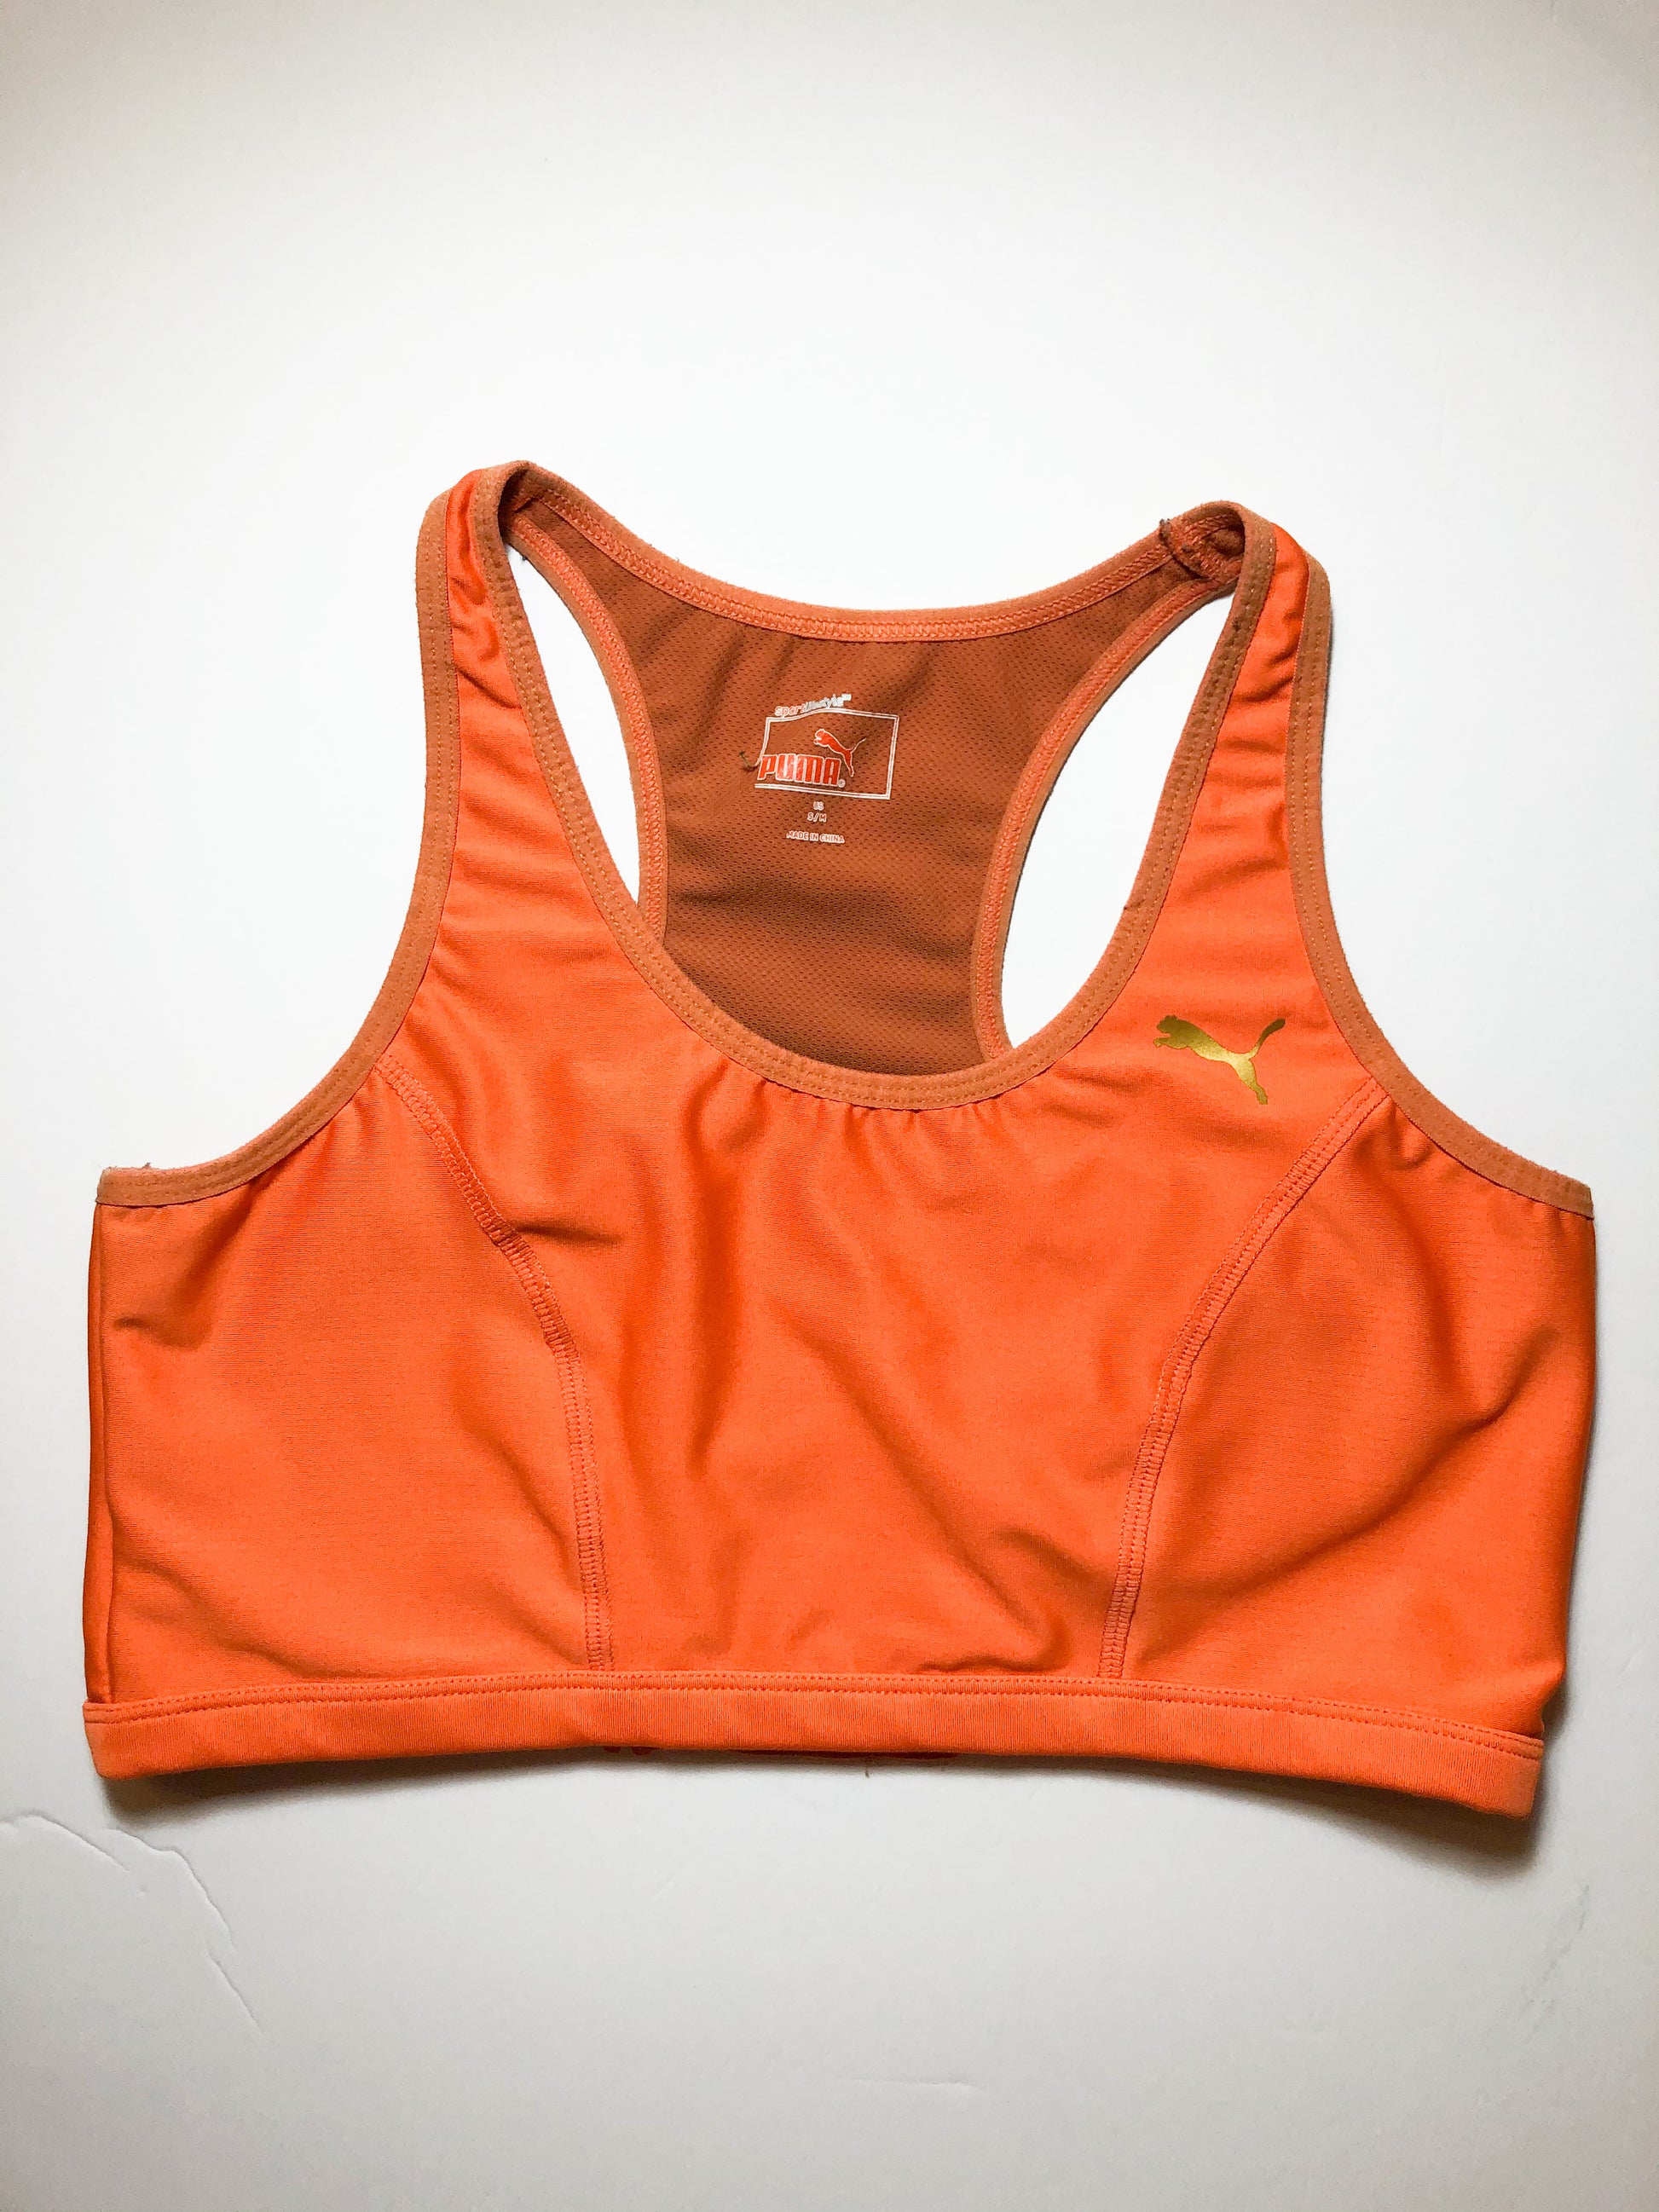 Puma Orange Sports Bra with Back Cutout - S/M – Le Prix Fashion & Consulting